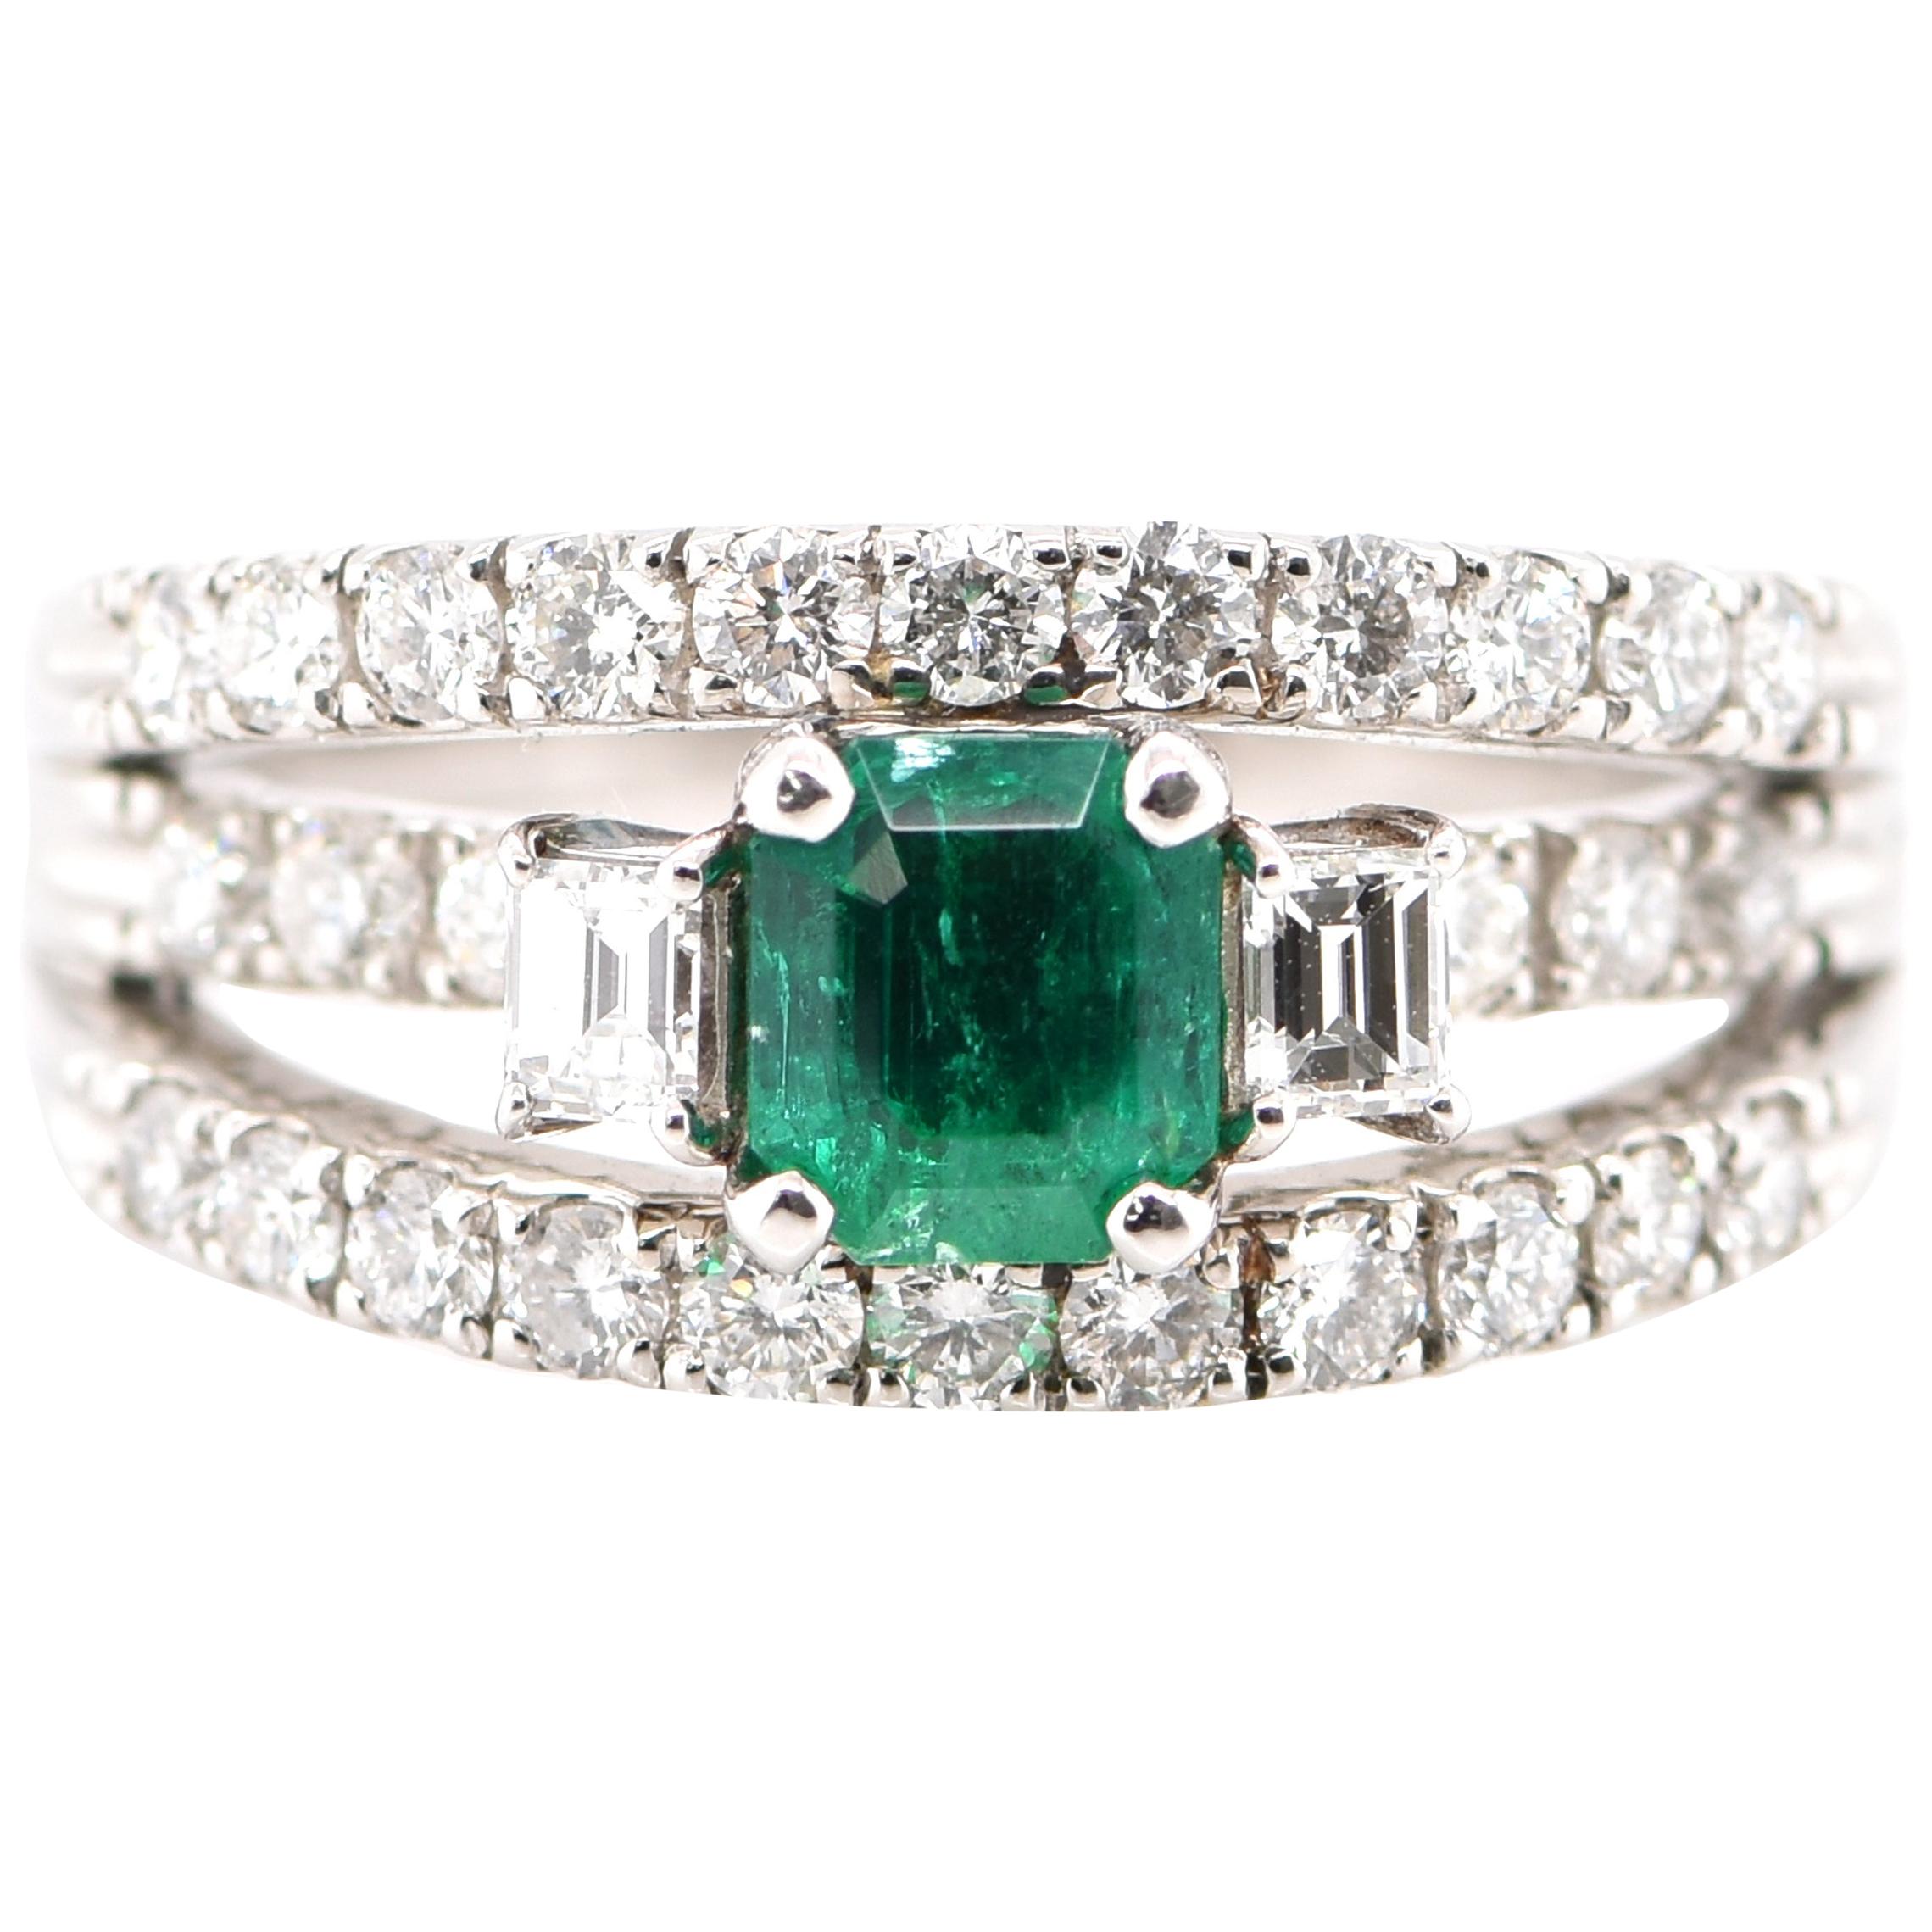 0.89 Carat Natural Emerald and Diamond Ring Set in Platinum